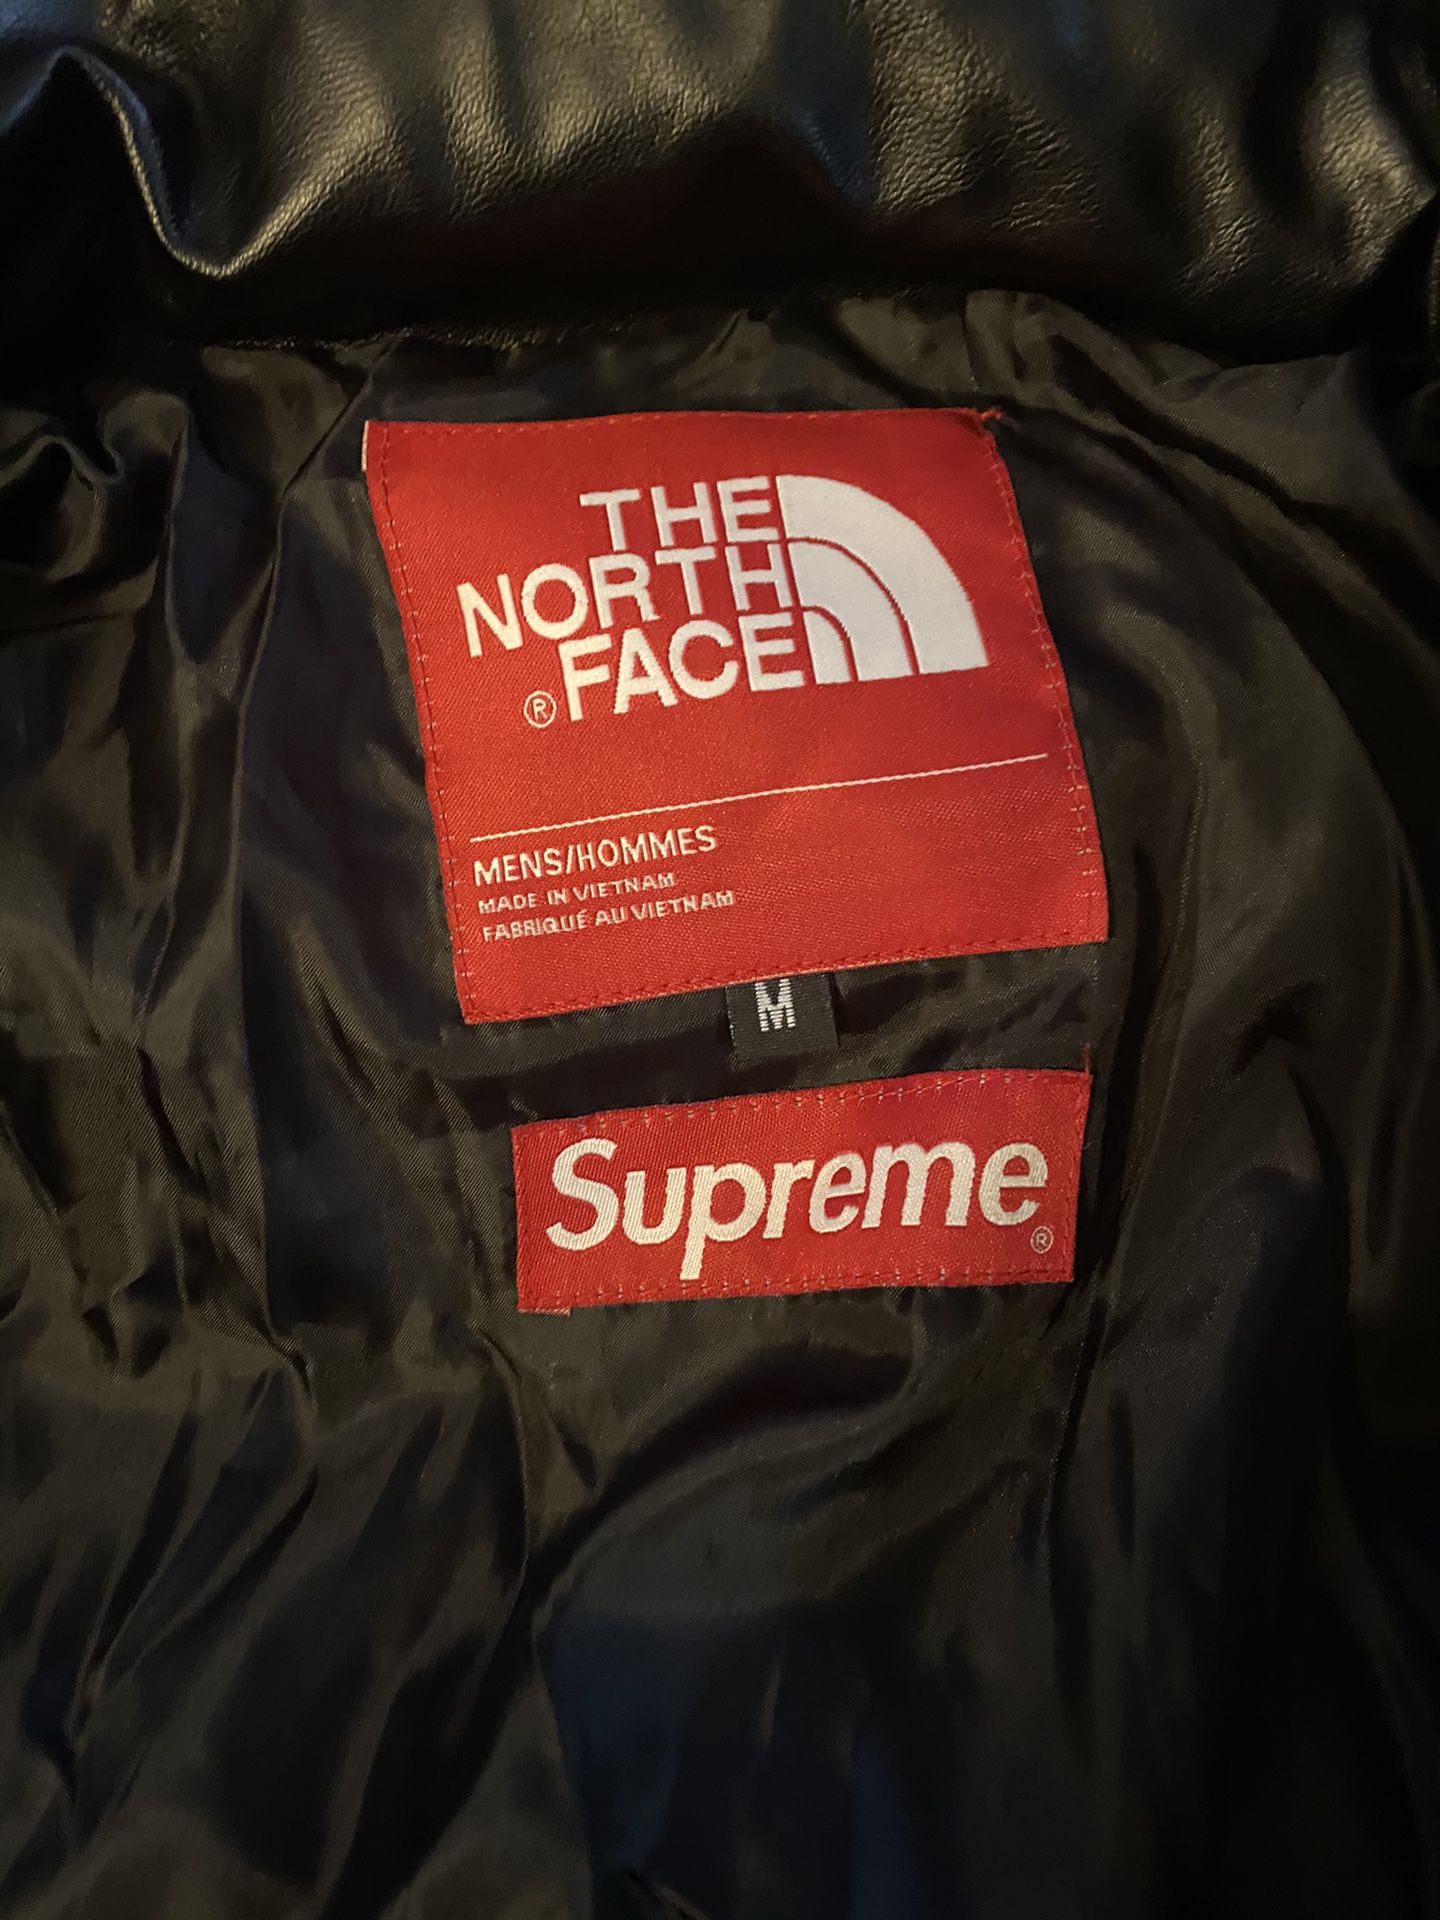 The Northface supreme